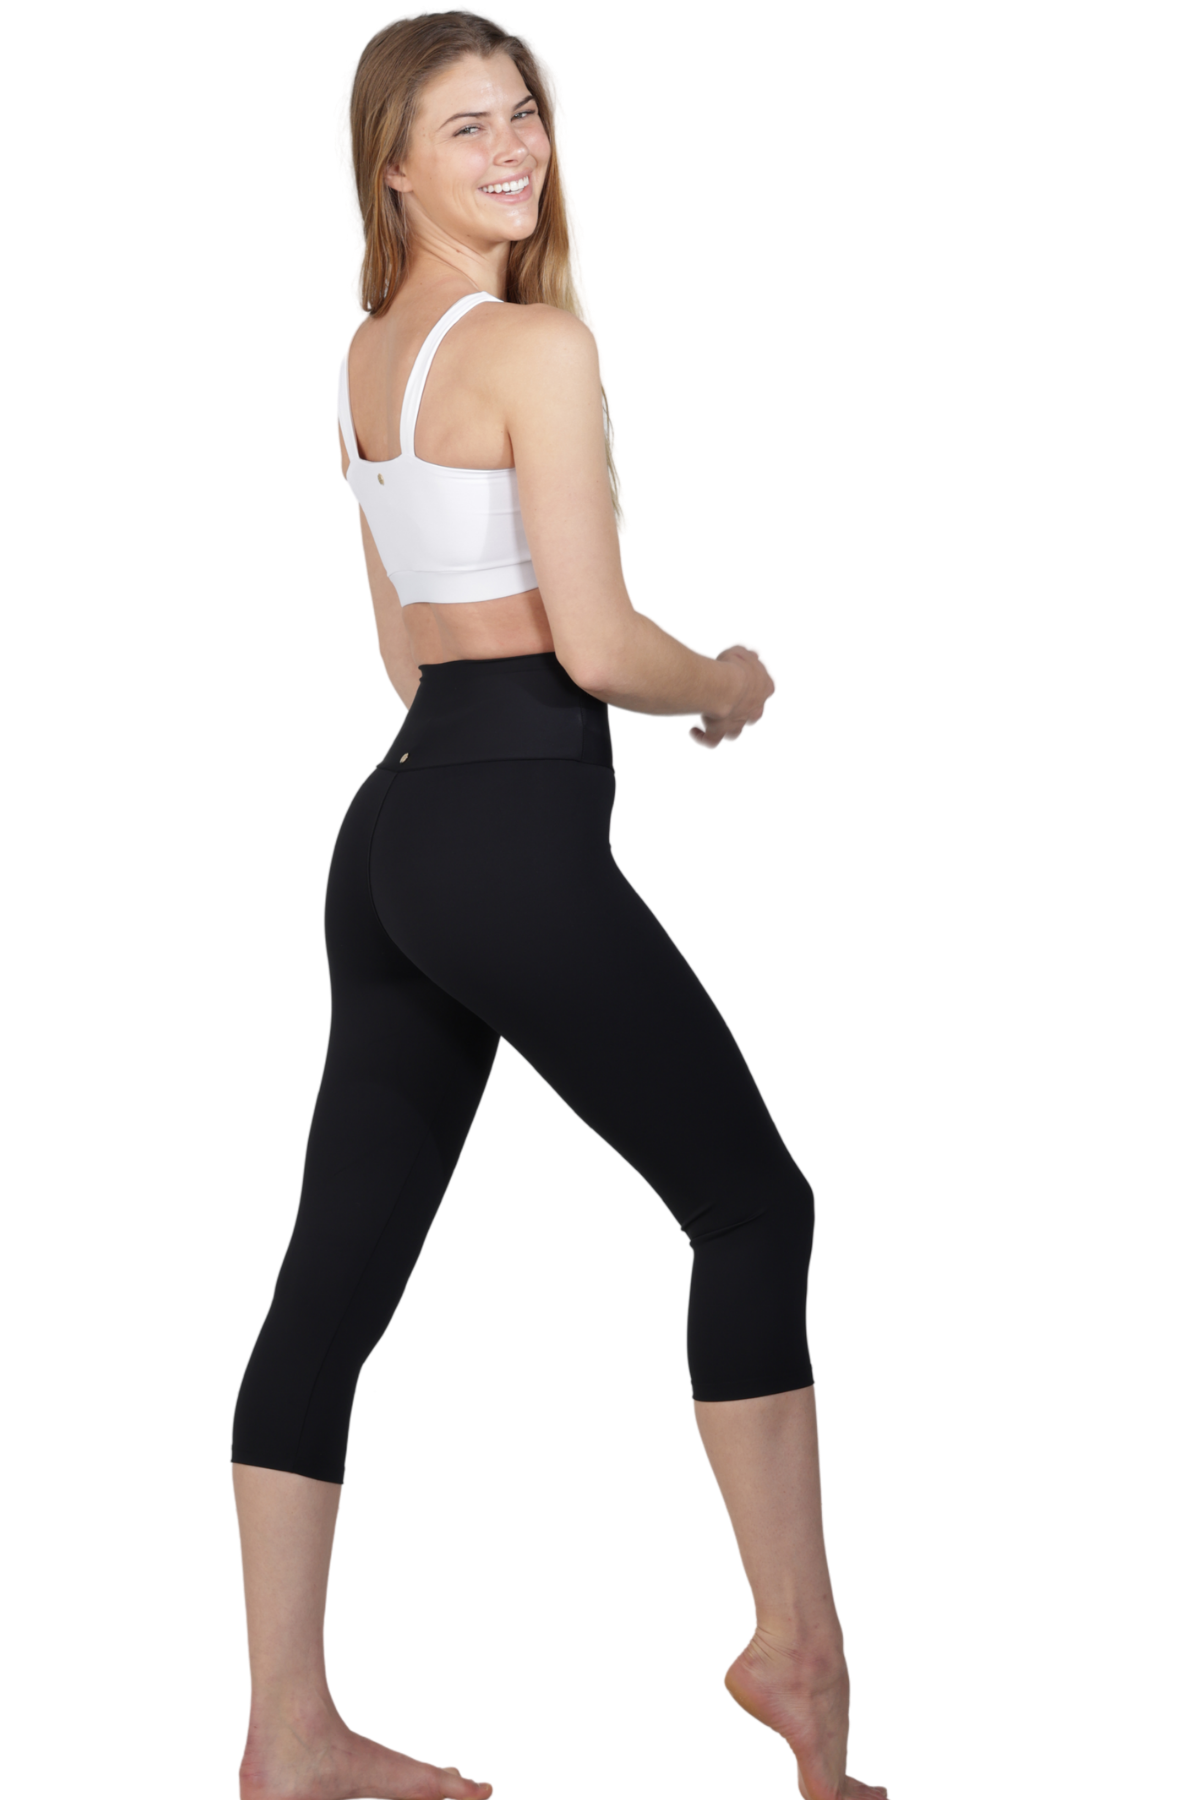 black high waist cellulite reducing cropped legging